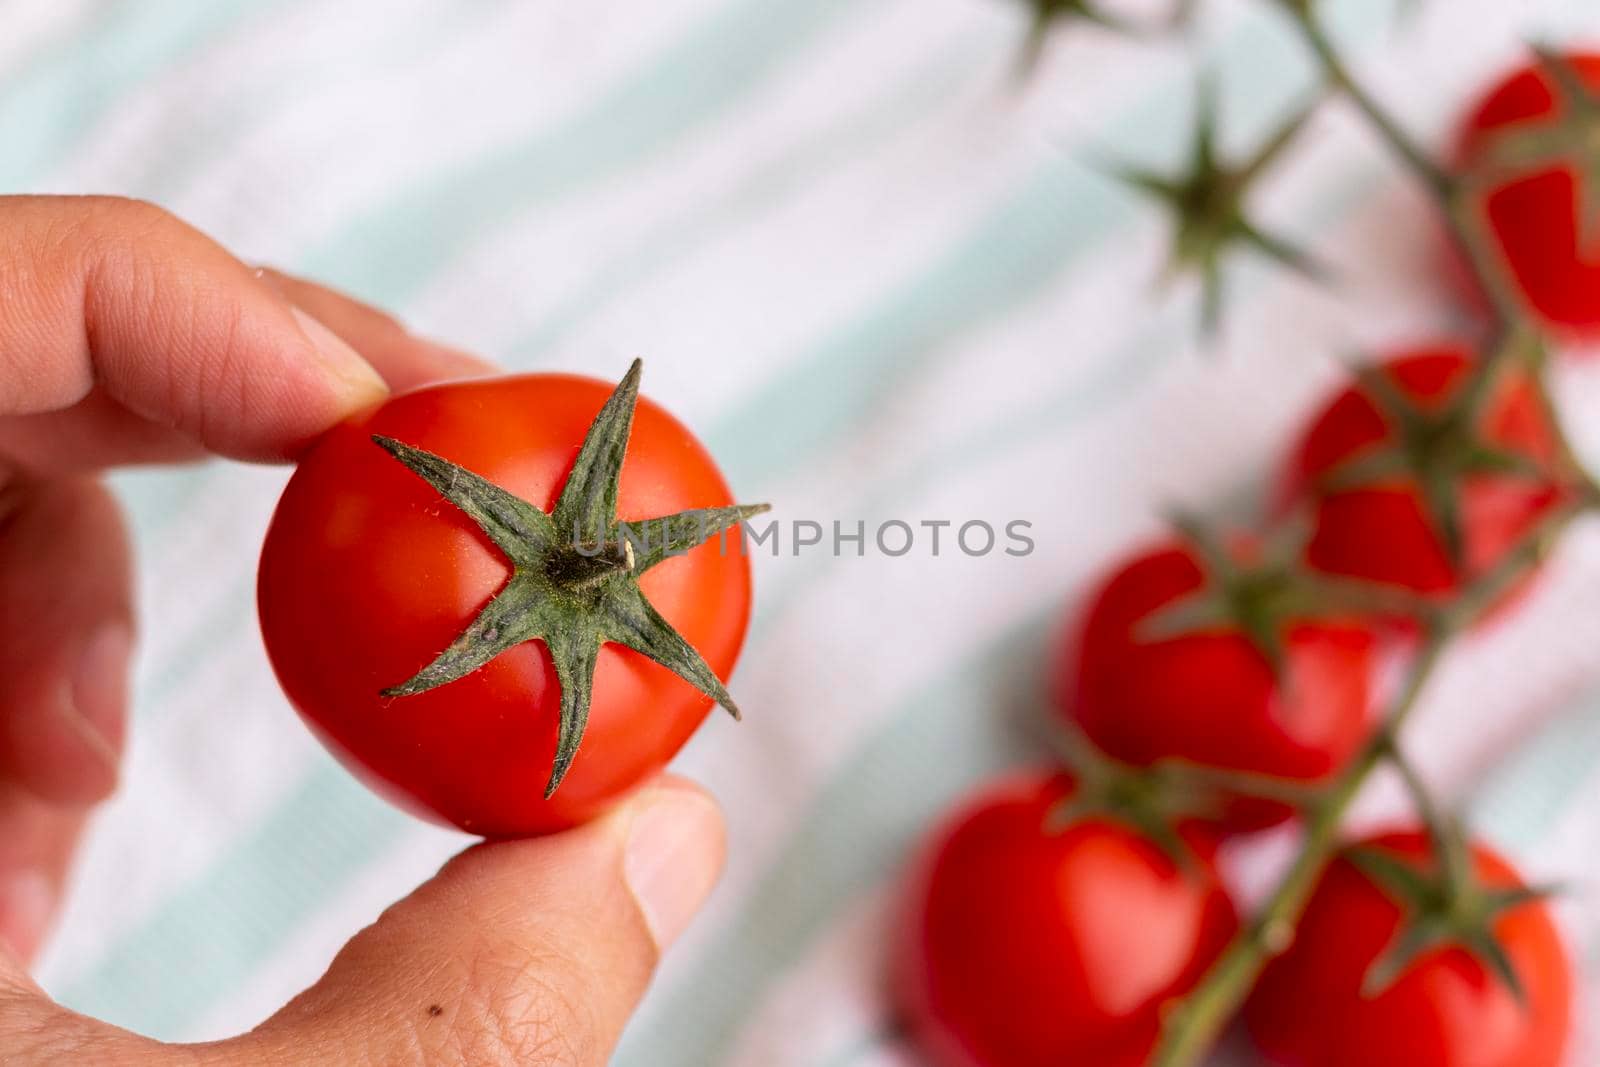 Hands holding cherries tomatoes